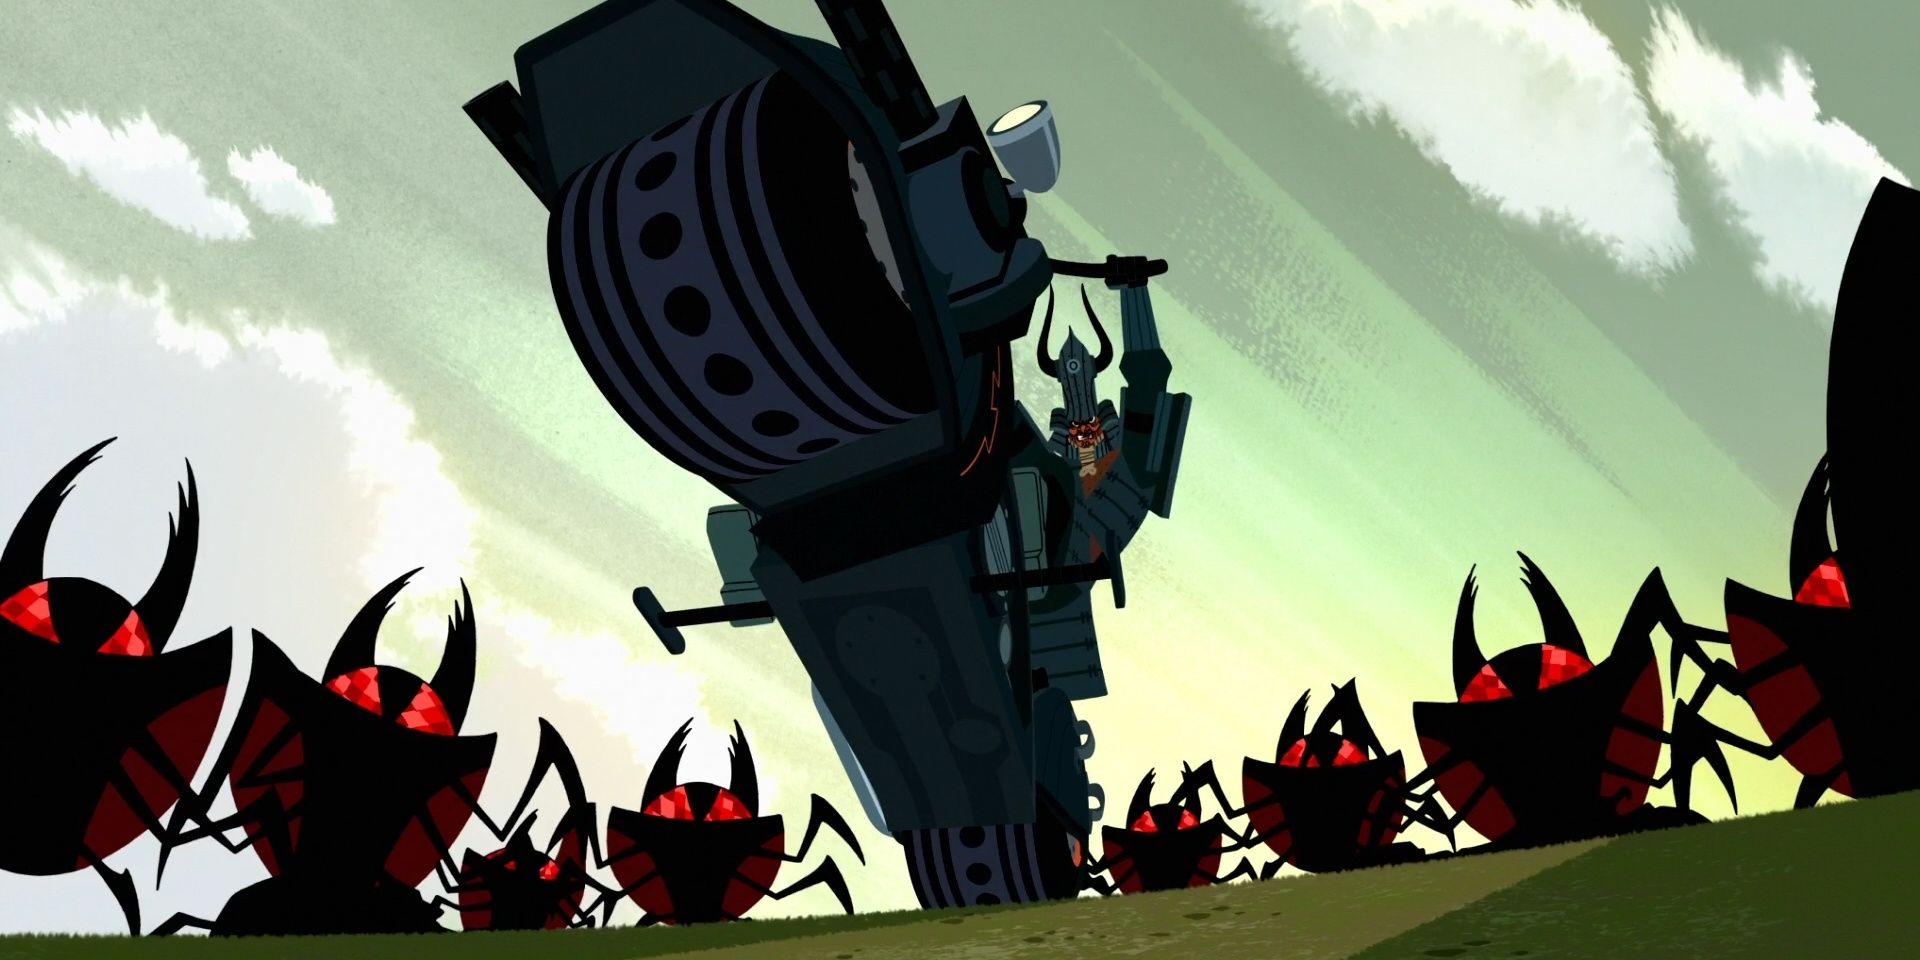 Samurai Jack motorcycle beetle-bot battle